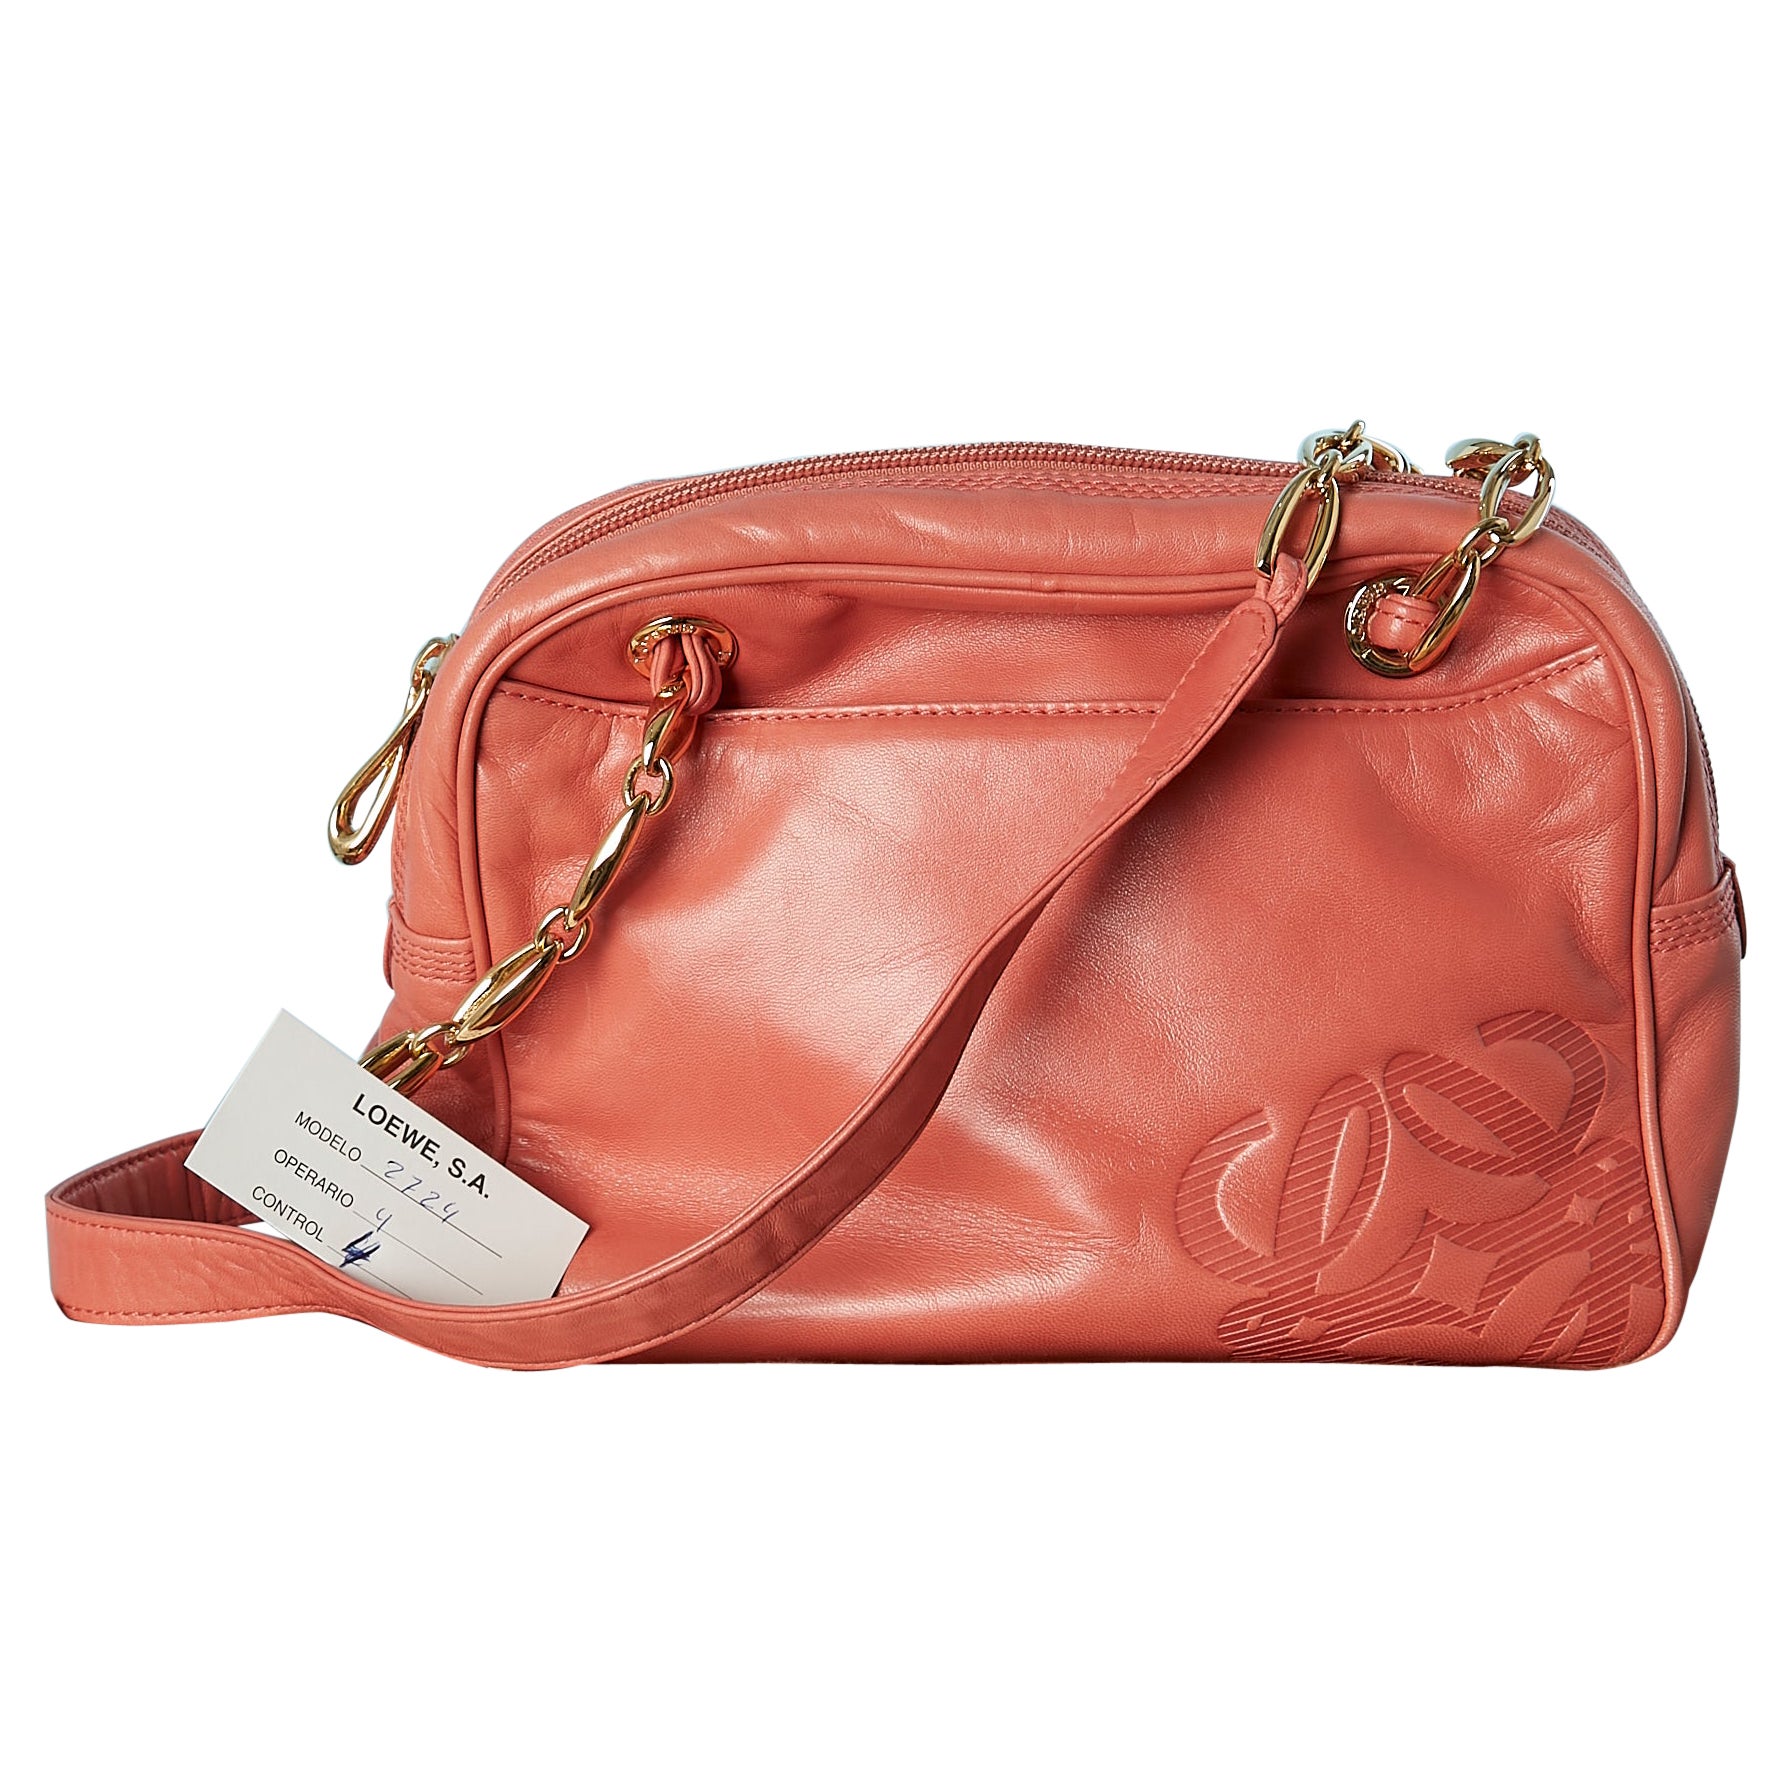 Pink leather shoulder bag with emboss brand and shoulder strap Loewe  For Sale